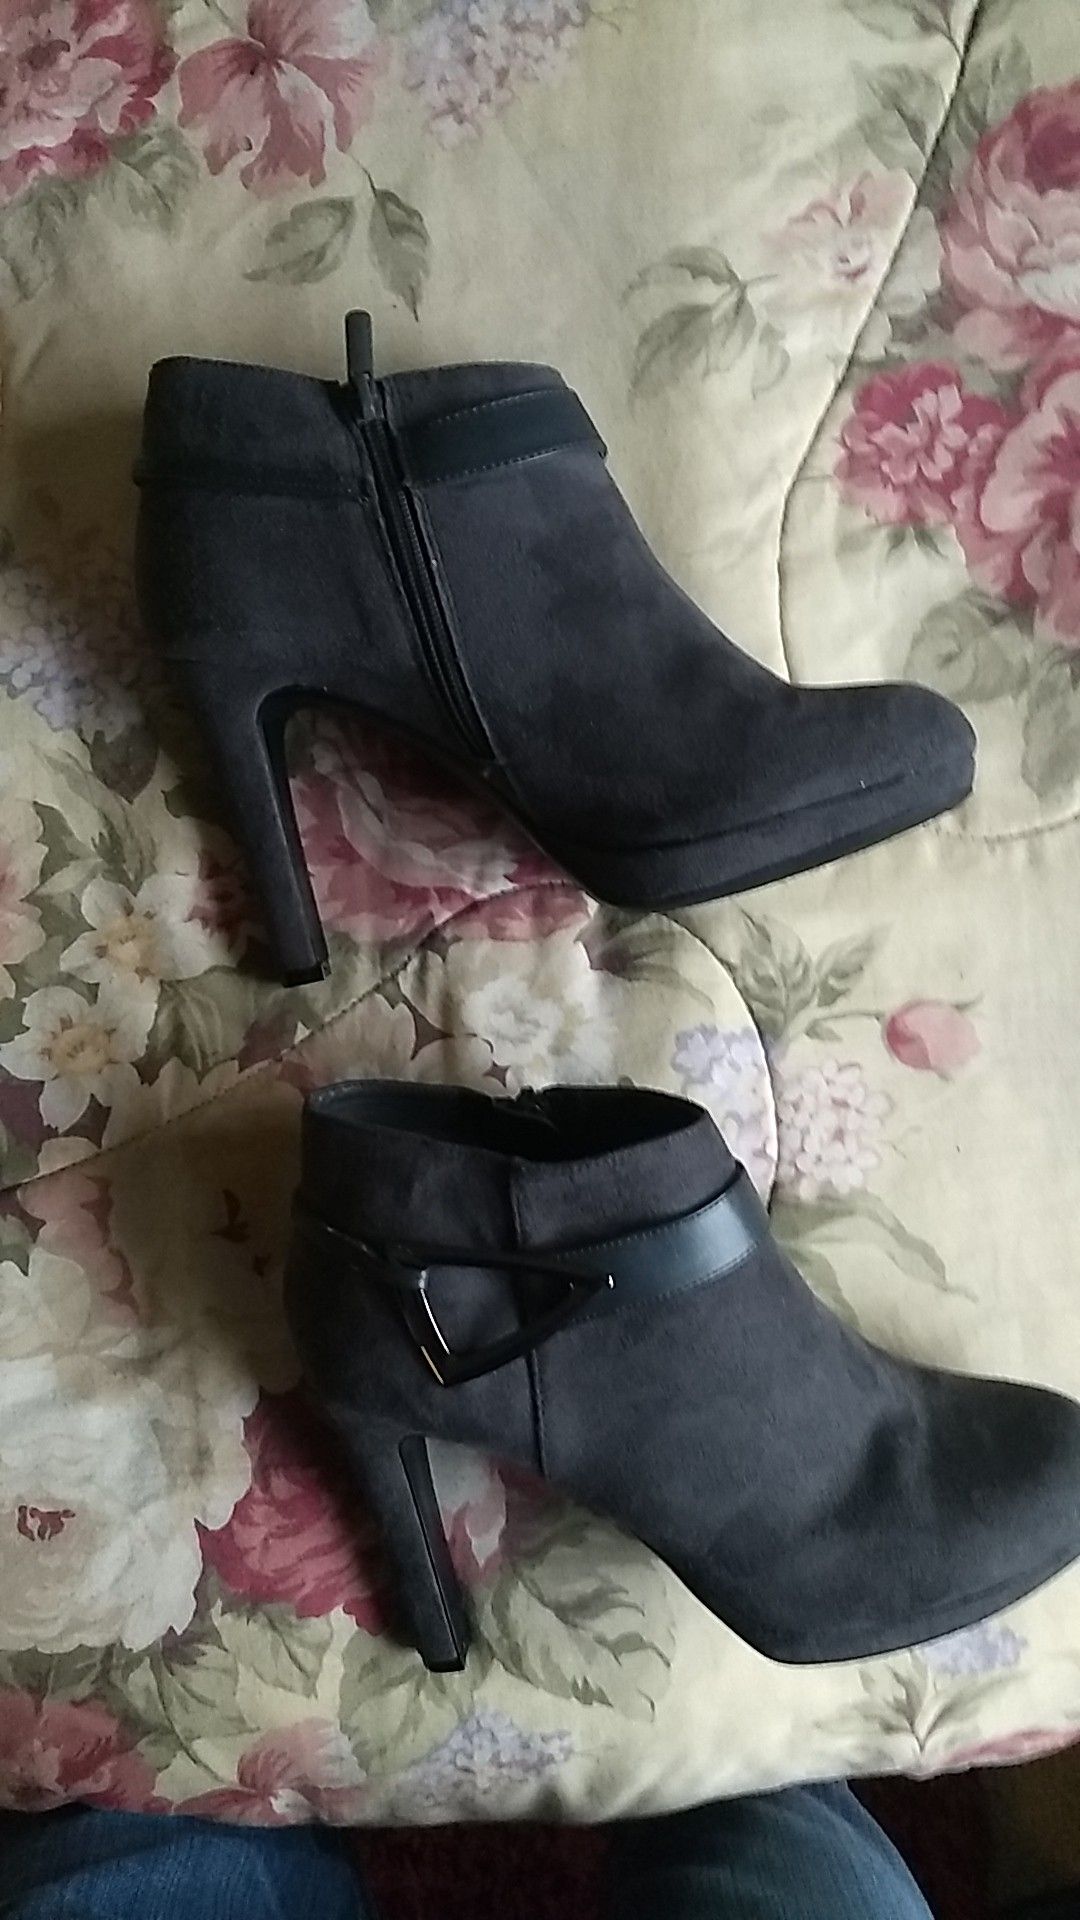 Tootsie brand high-heeled short boots